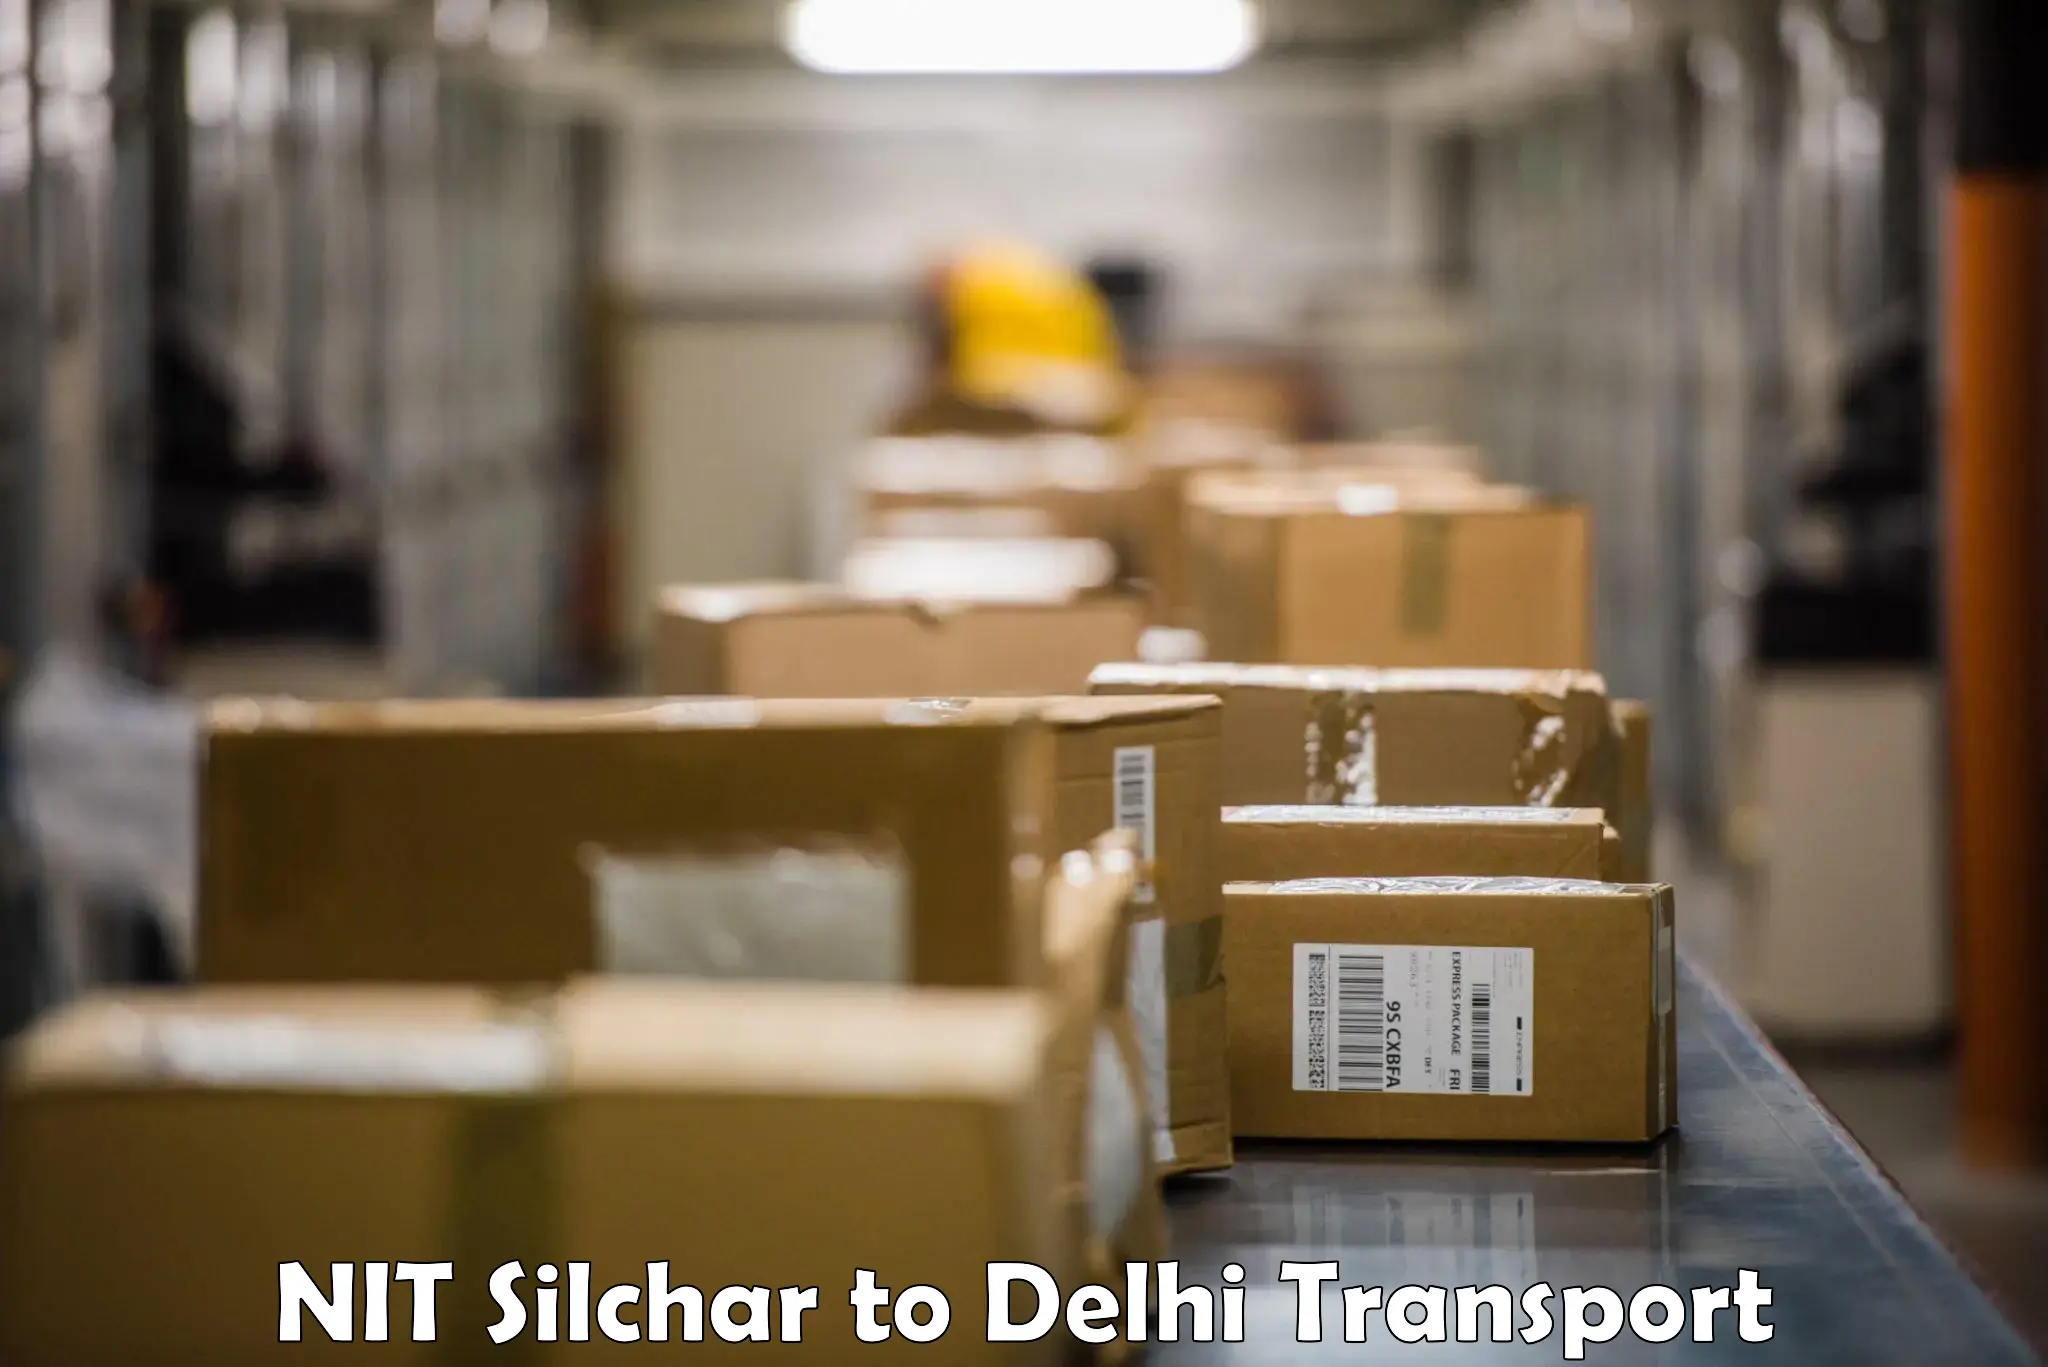 Online transport service NIT Silchar to Delhi